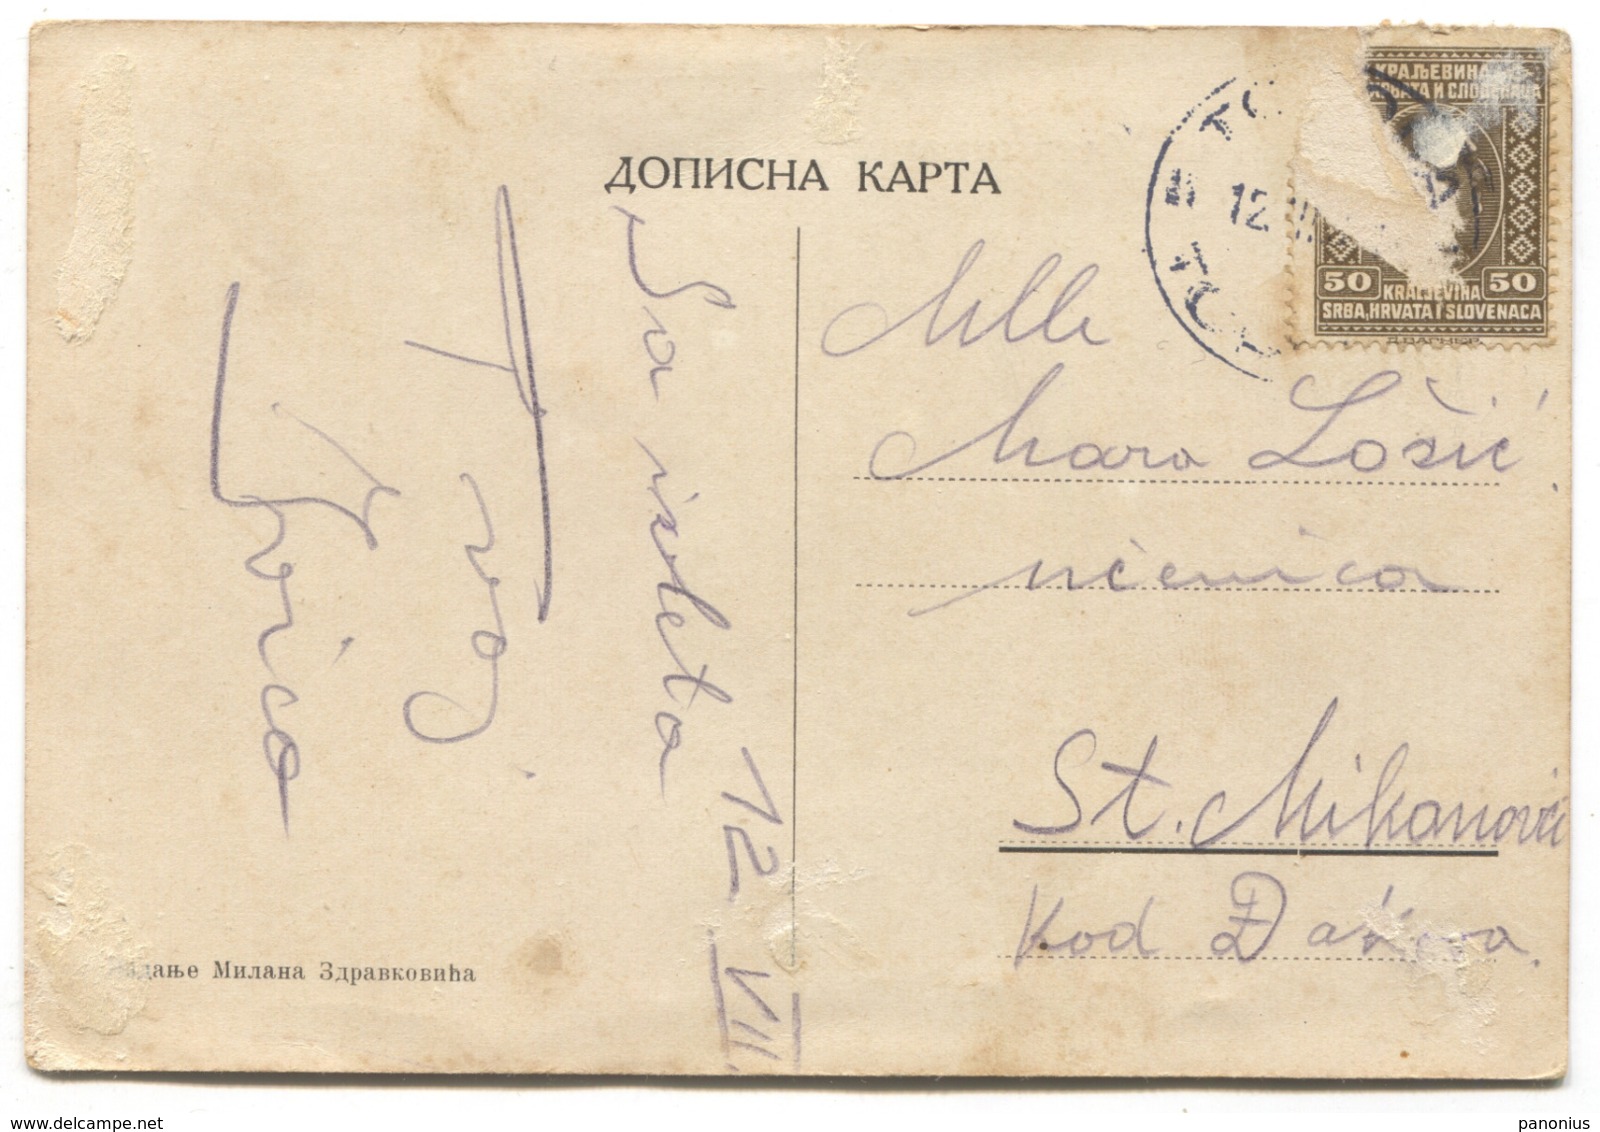 NATALINCI Topola Serbia, Drugstore Apoteka, Year 1922 - Serbia